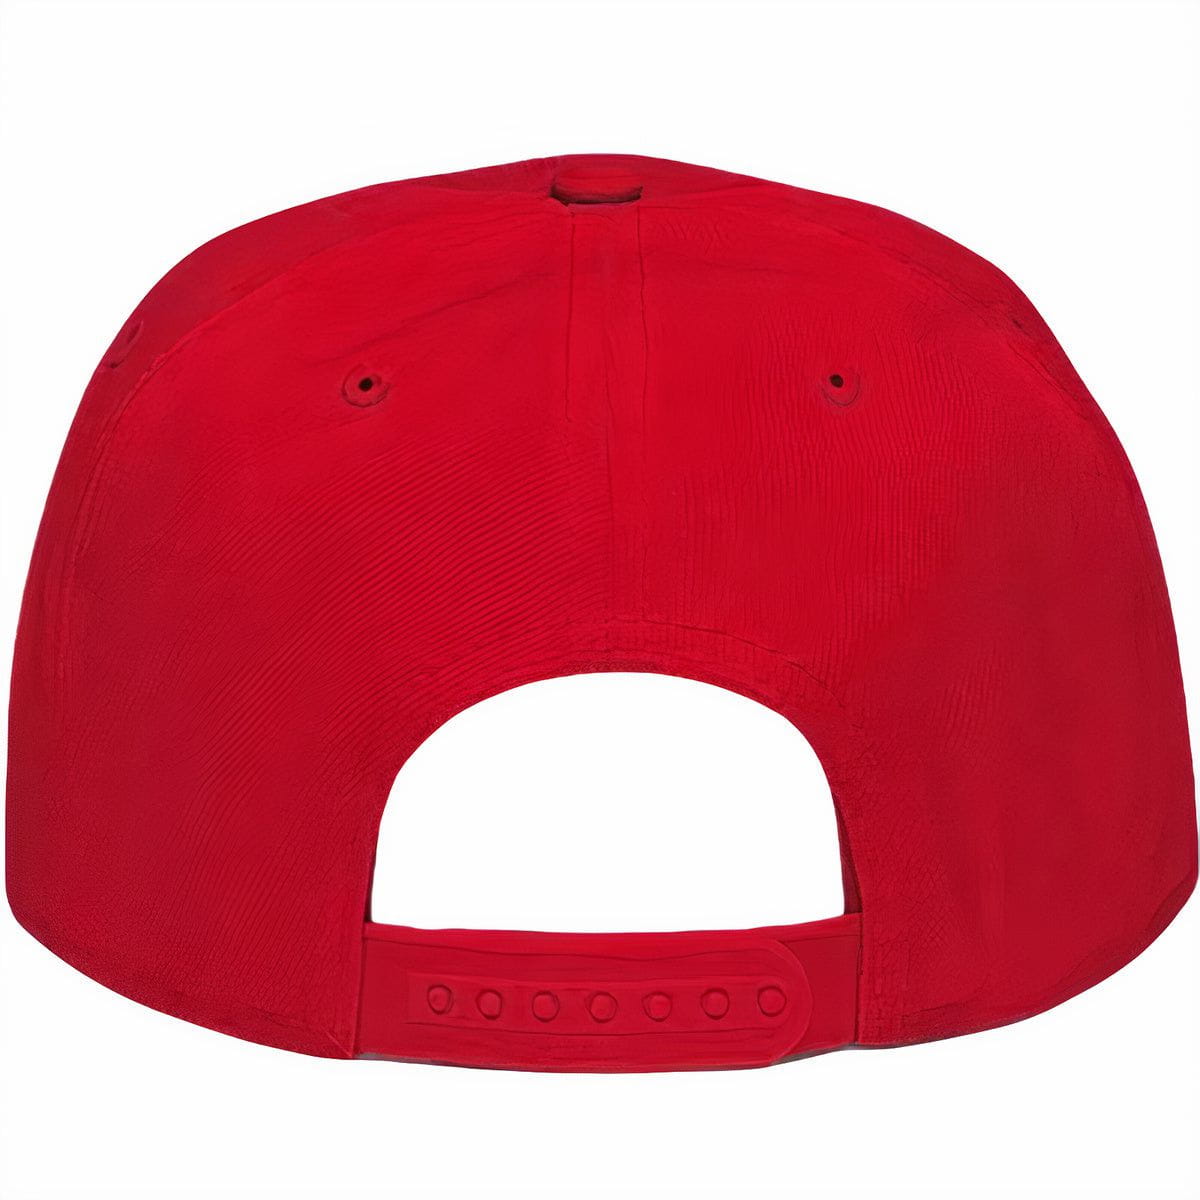 Red Cement 4s Snapback Hat - Jordan 4 Cement Hats - Money Talks